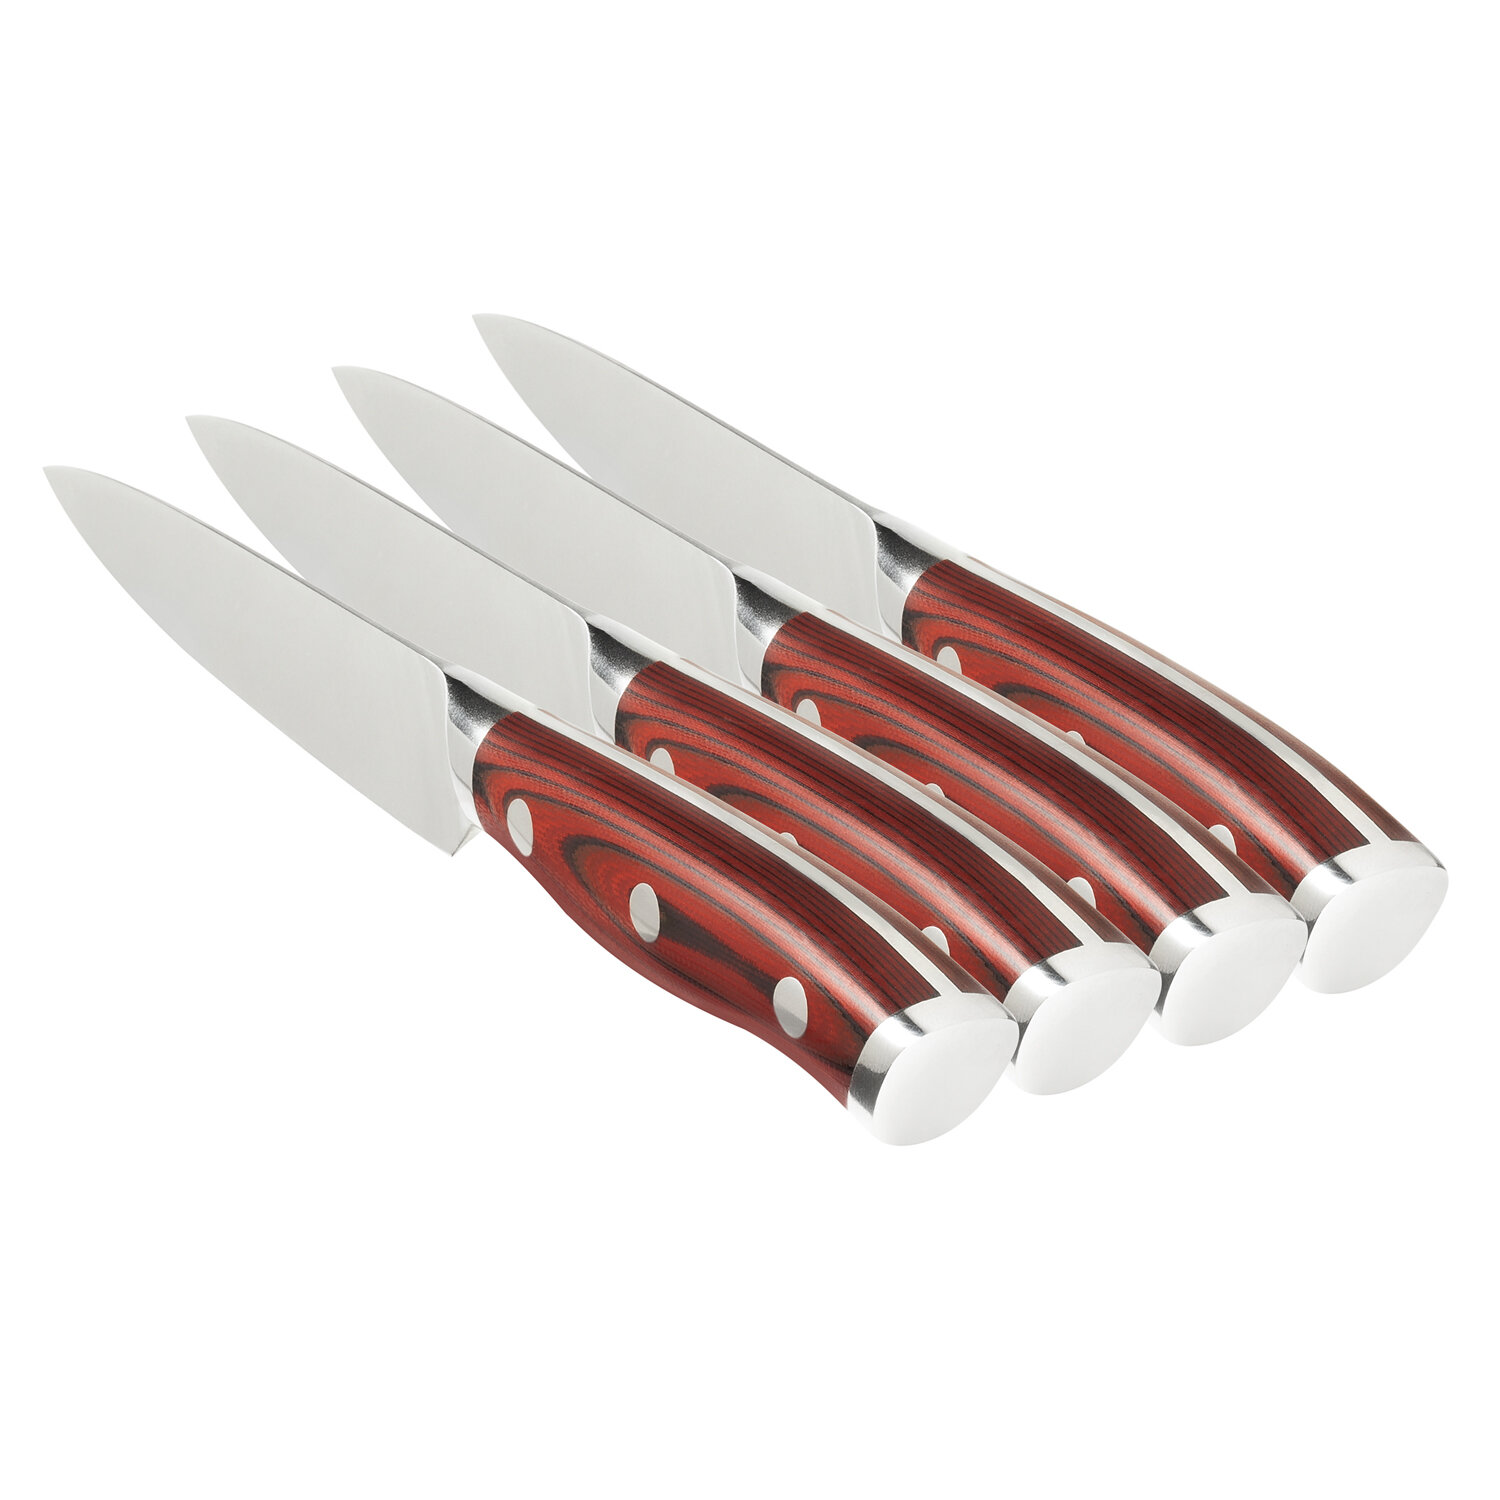 Viking 6-Piece Pakka Wood Steak Knife Set with Gift Box (Red)